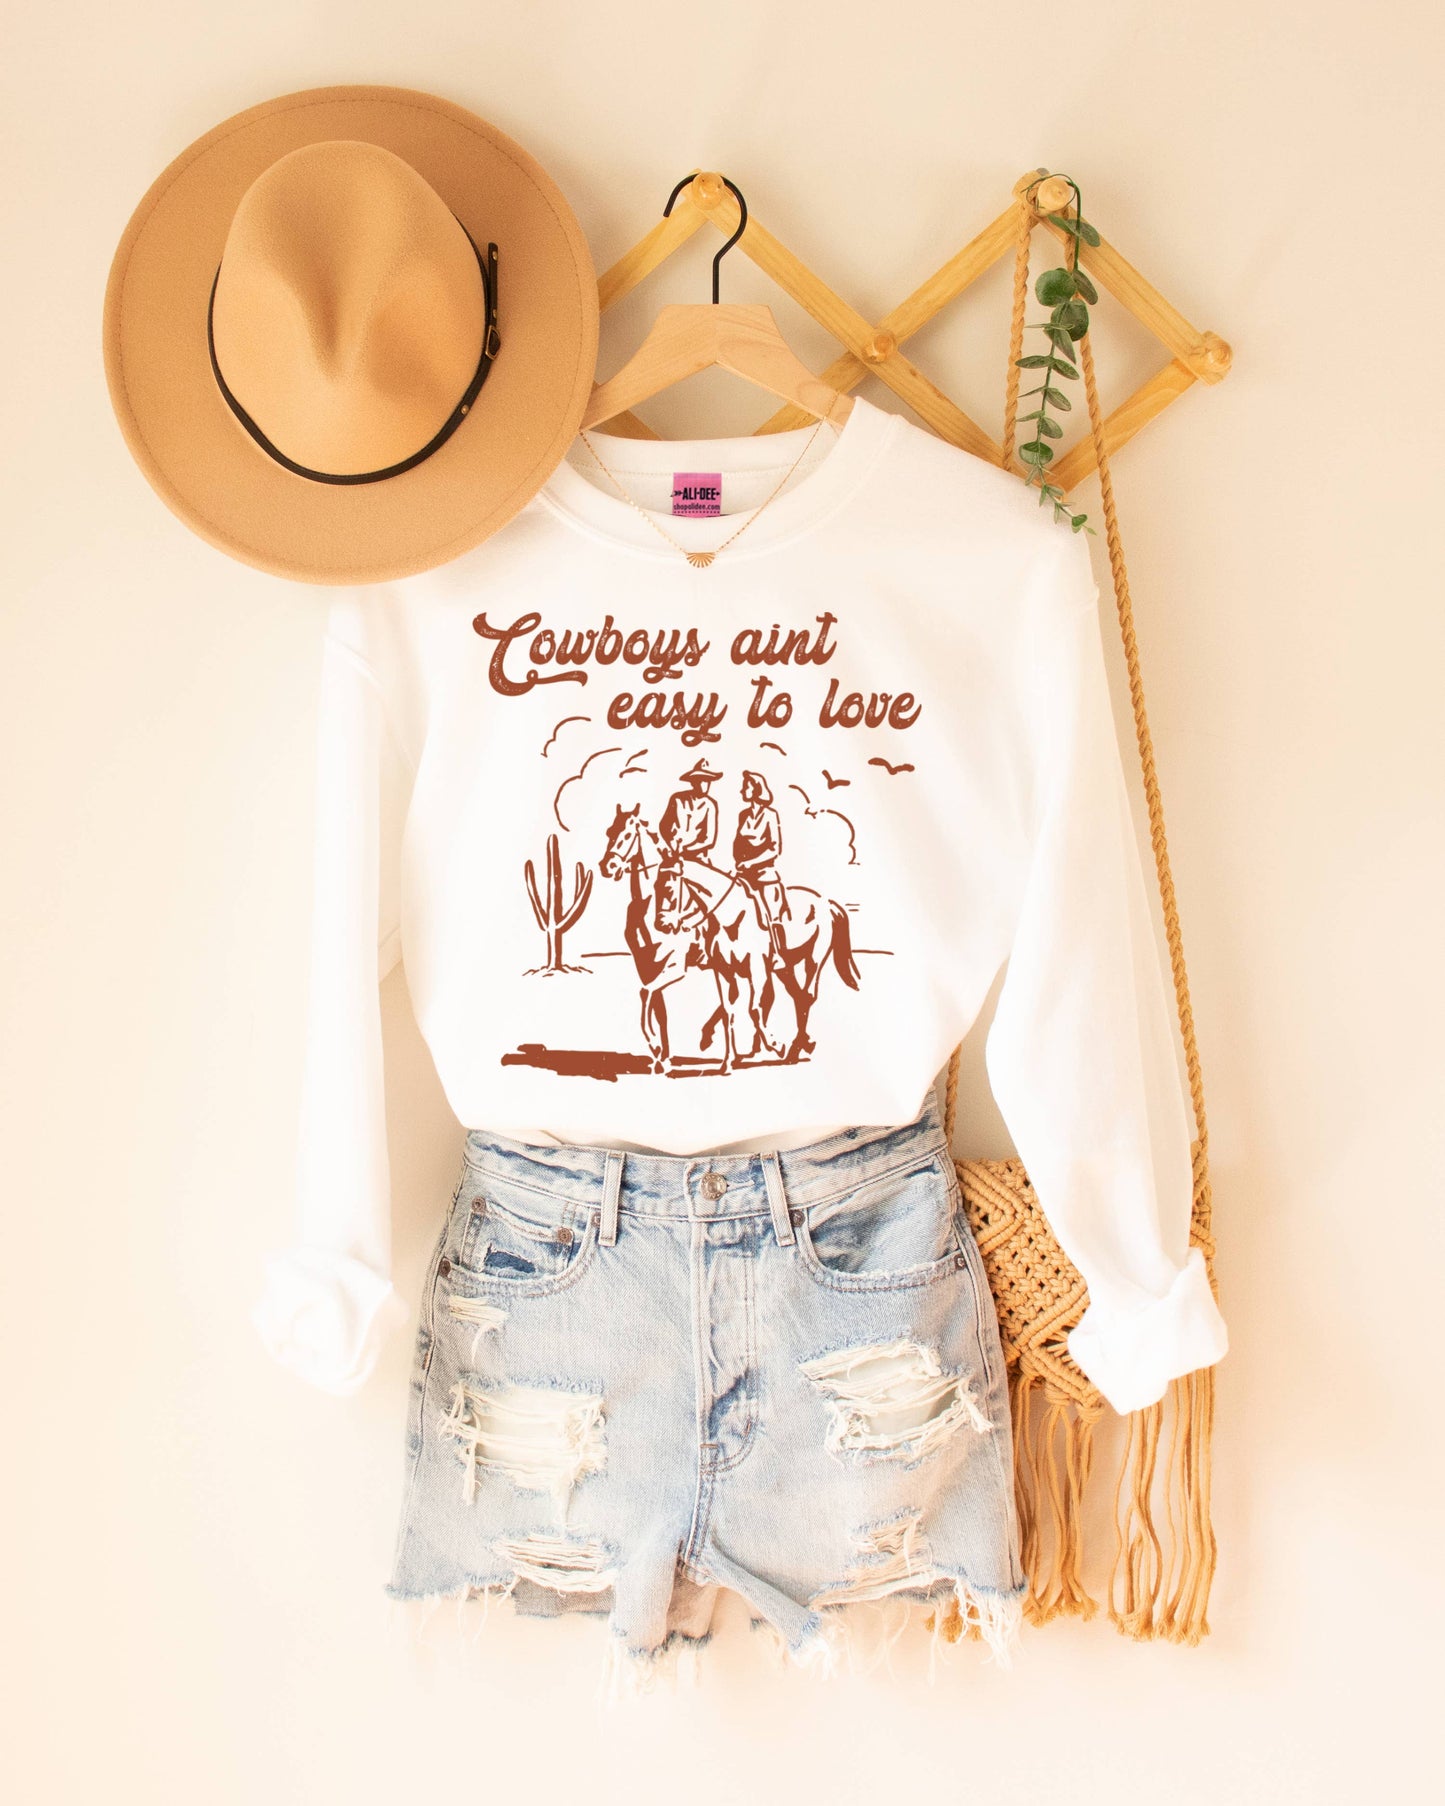 Cowboys Ain't Easy to Love Sweatshirt - White